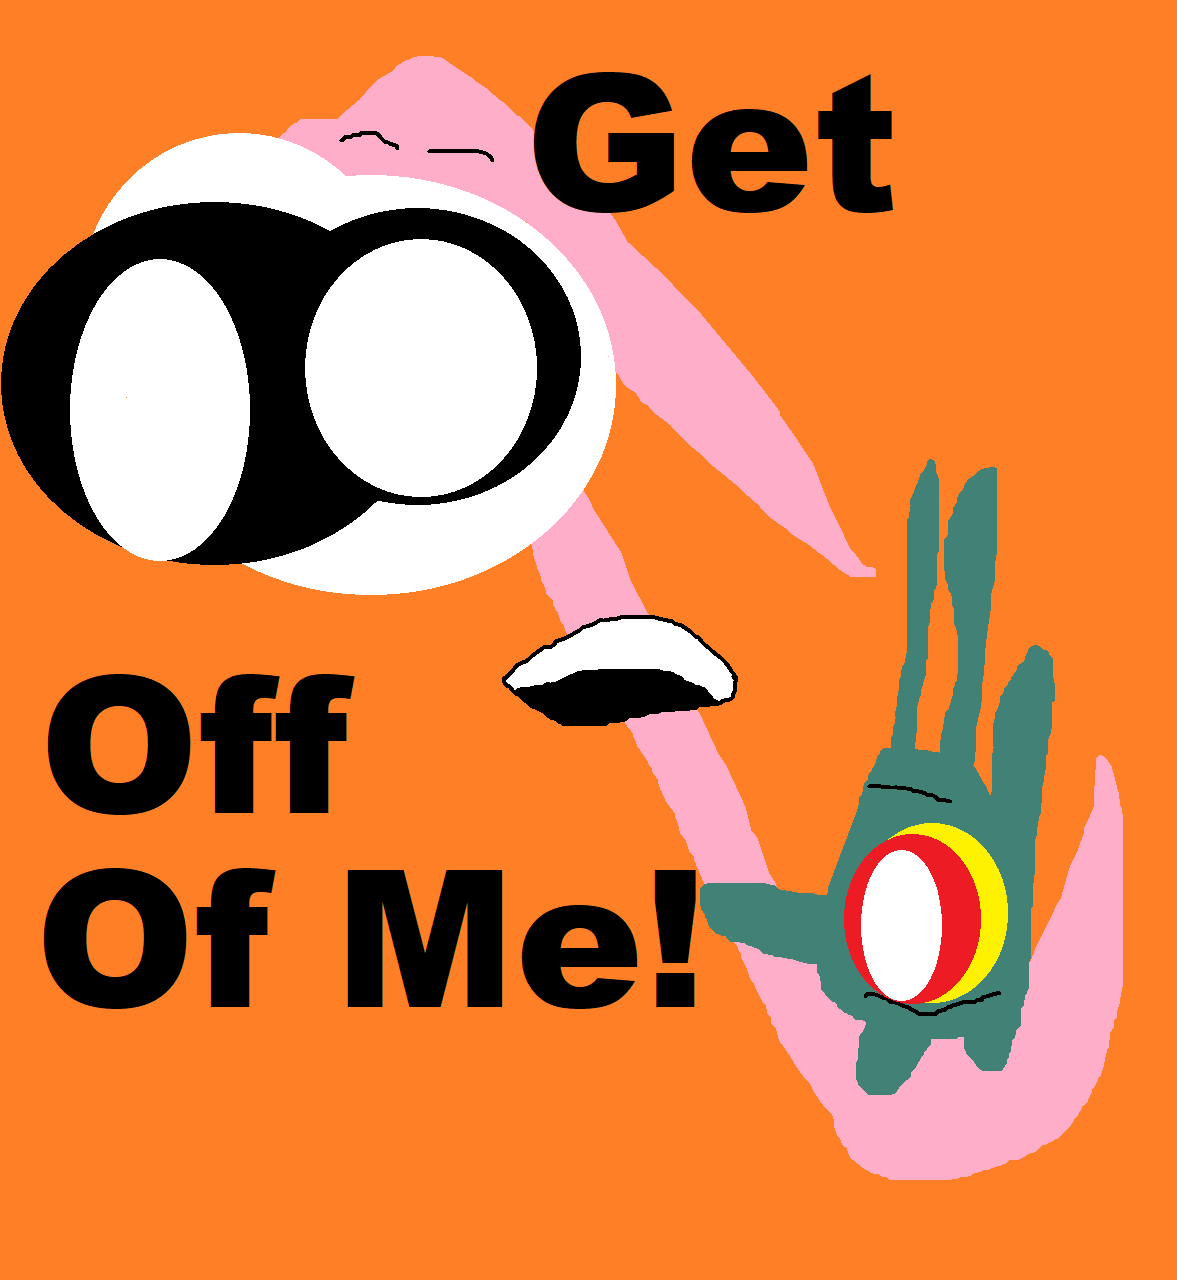 Get Off Of Me by Falconlobo